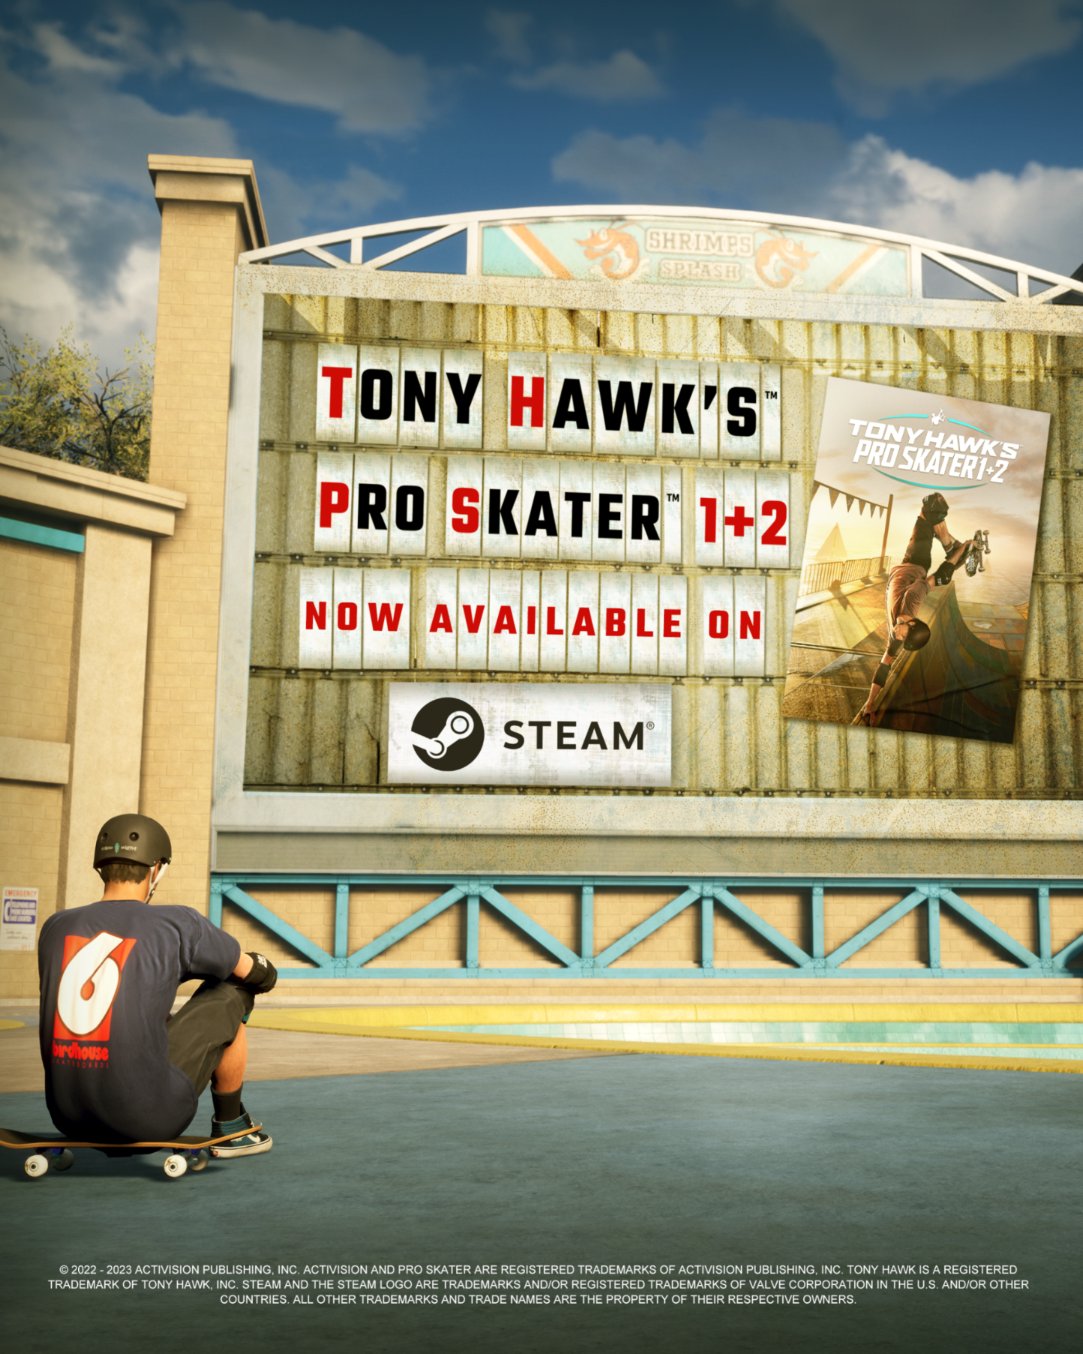 Tony Hawk’s™ Pro Skater™ 1 + 2 - The United Pack